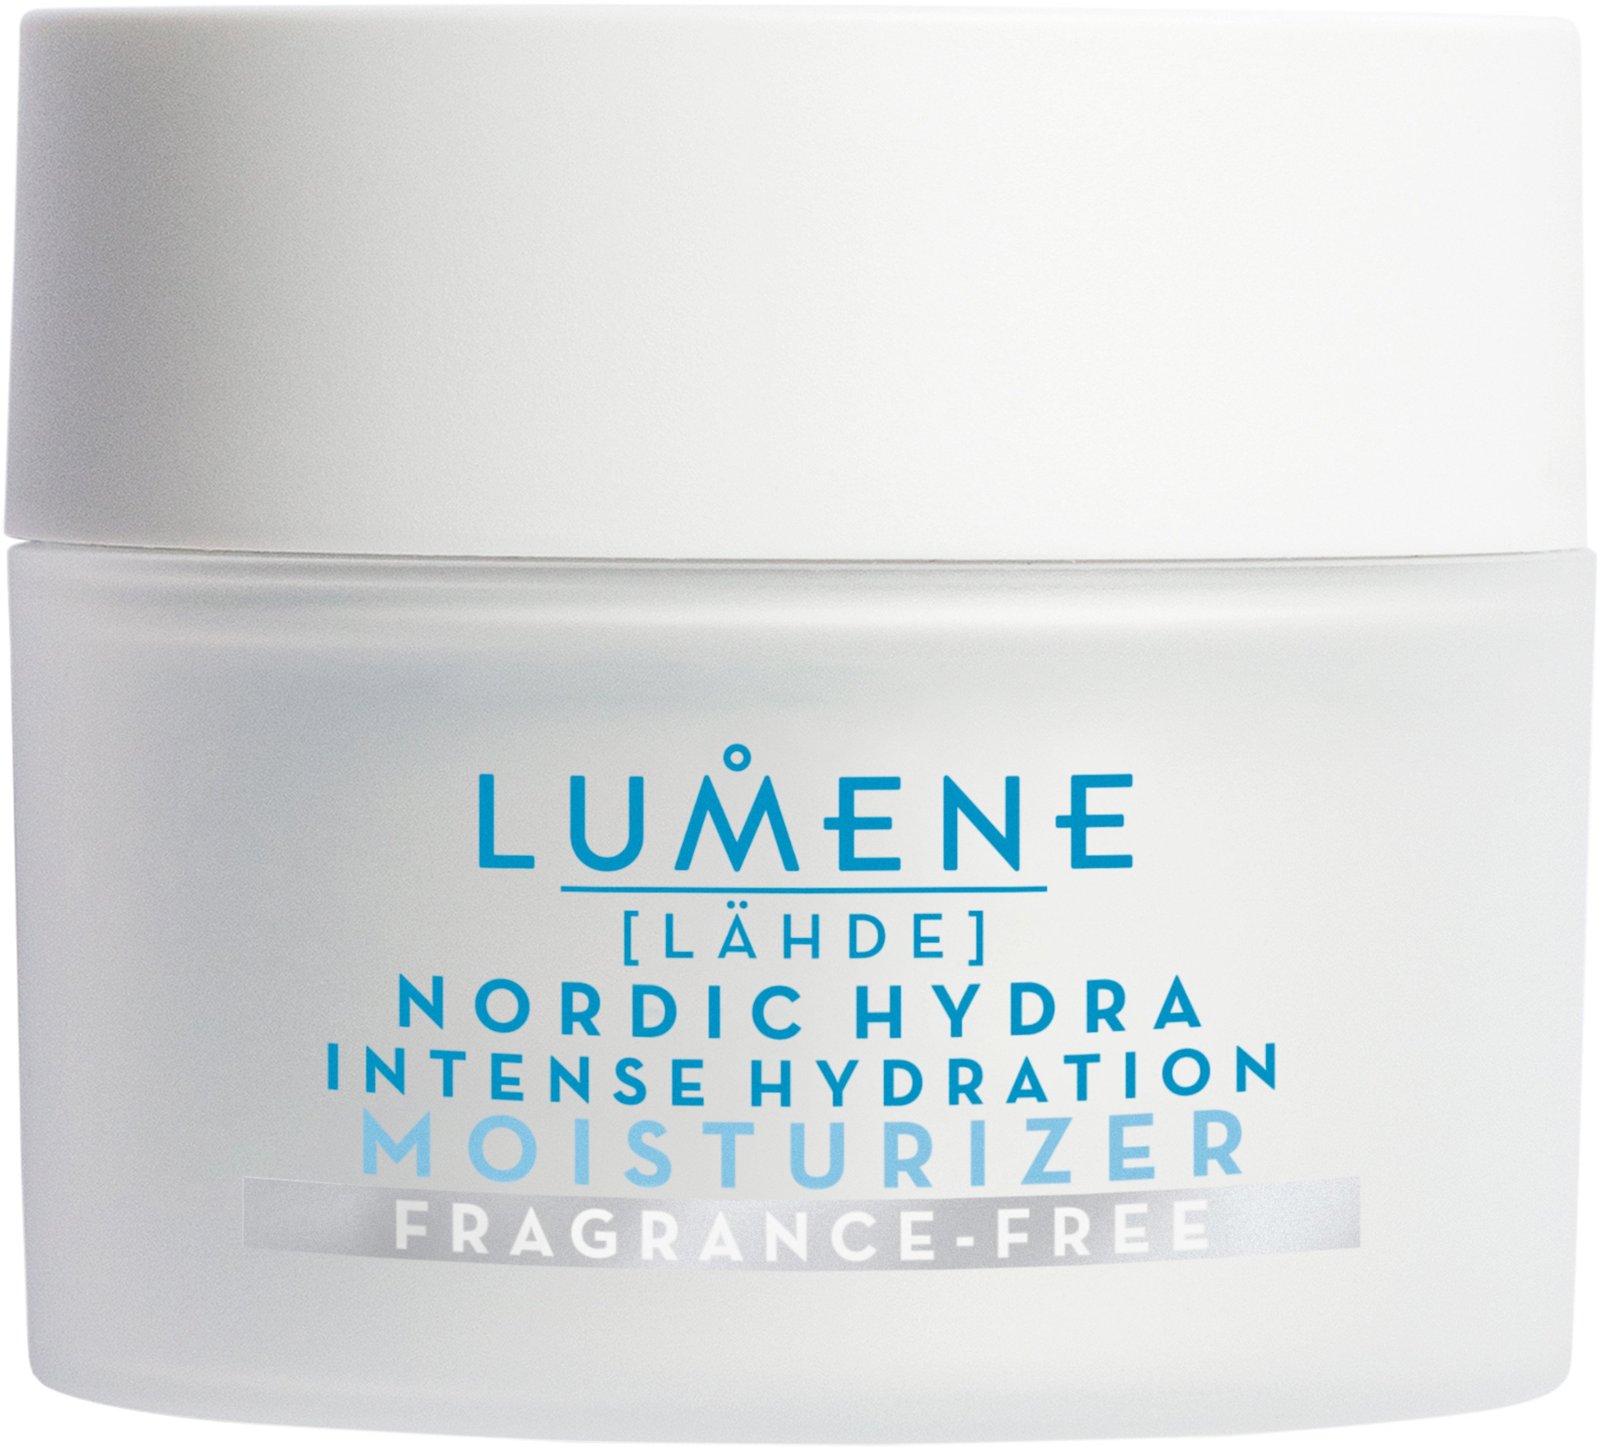 Lumene Nordic Hydra Intense Hydration Moisturizer Fragrance Free 50 ml